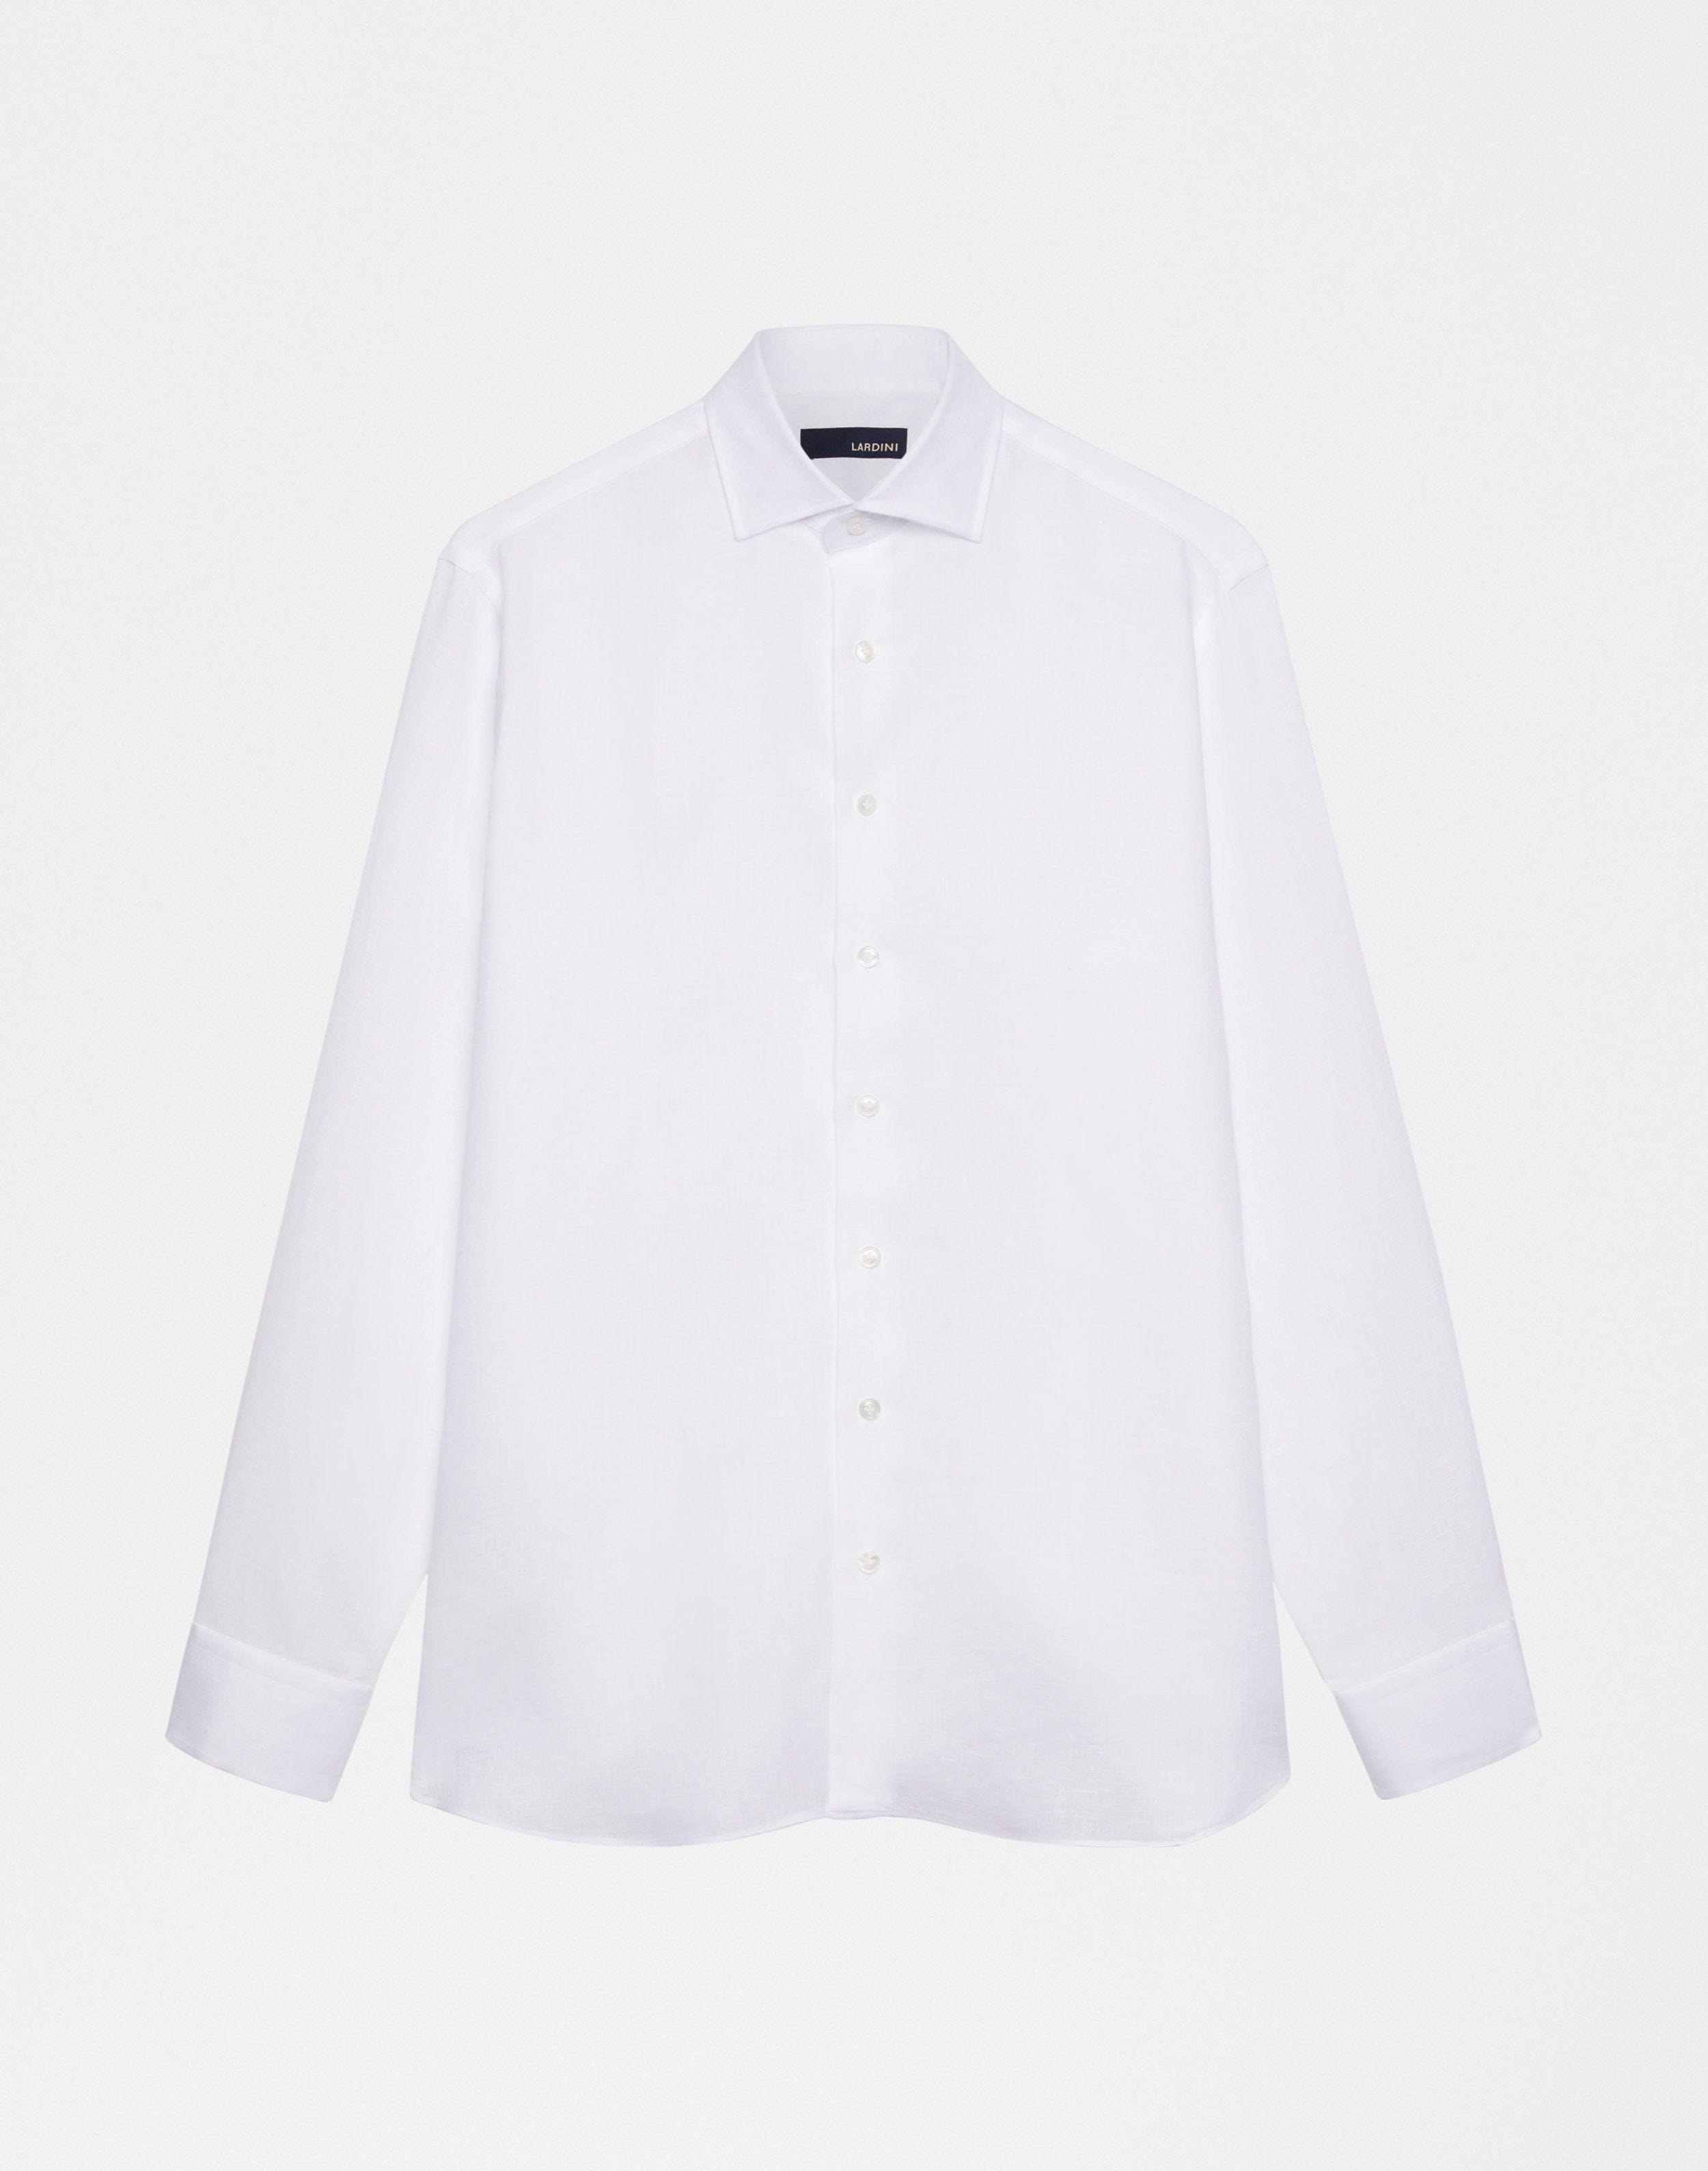 Classic white linen cloth shirt | Lardini